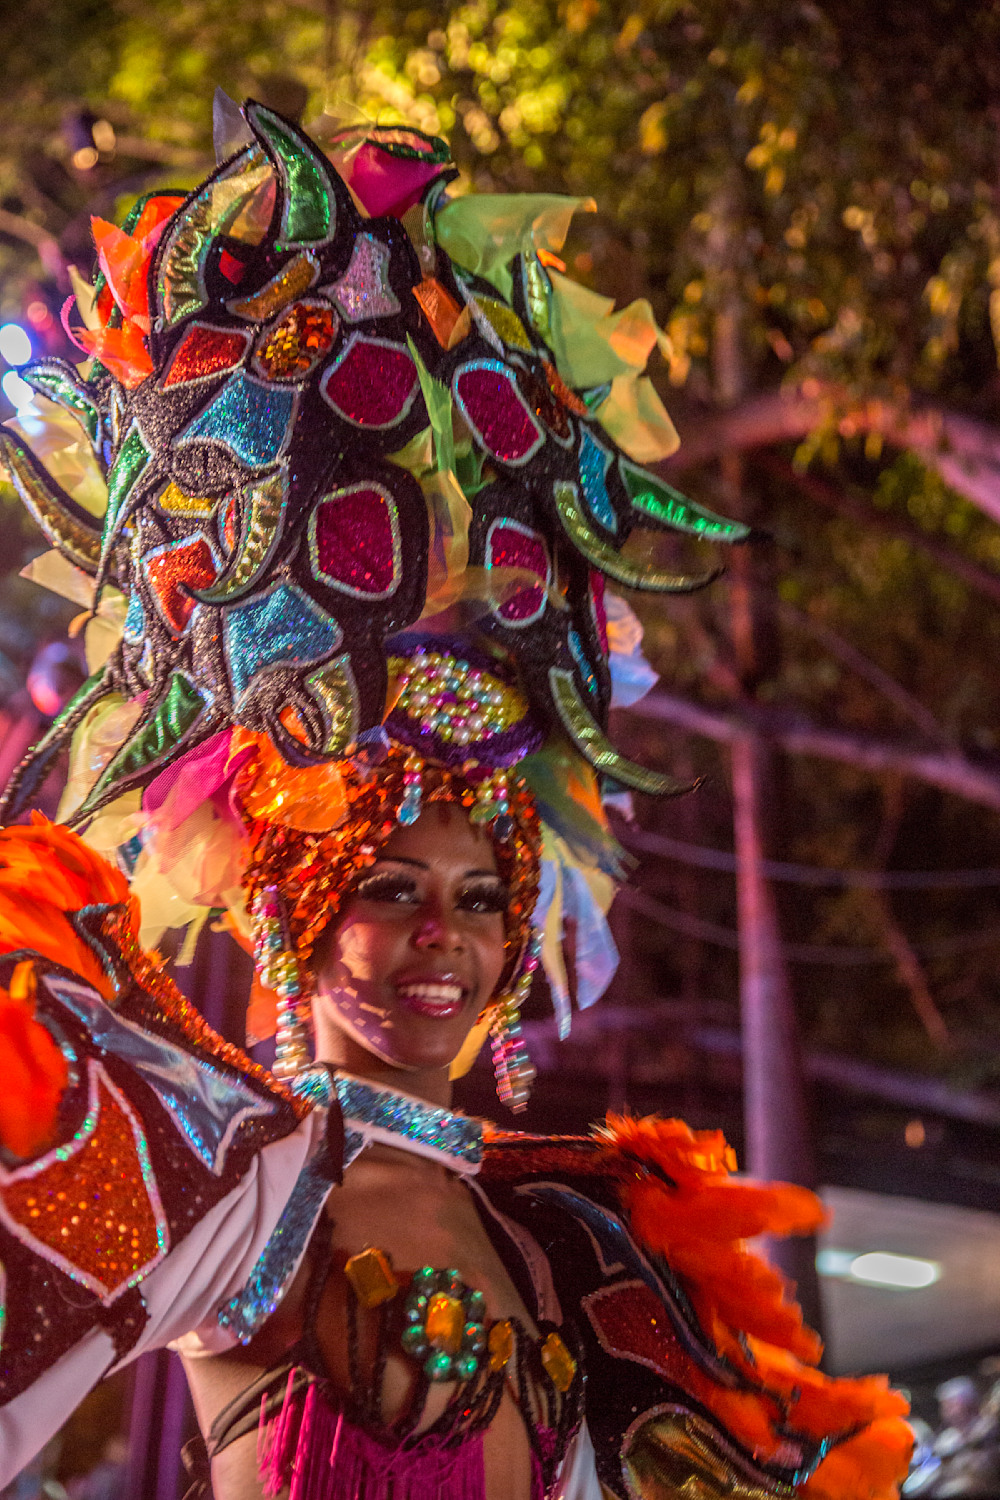 Colorful lady dancer in Havana for celebration